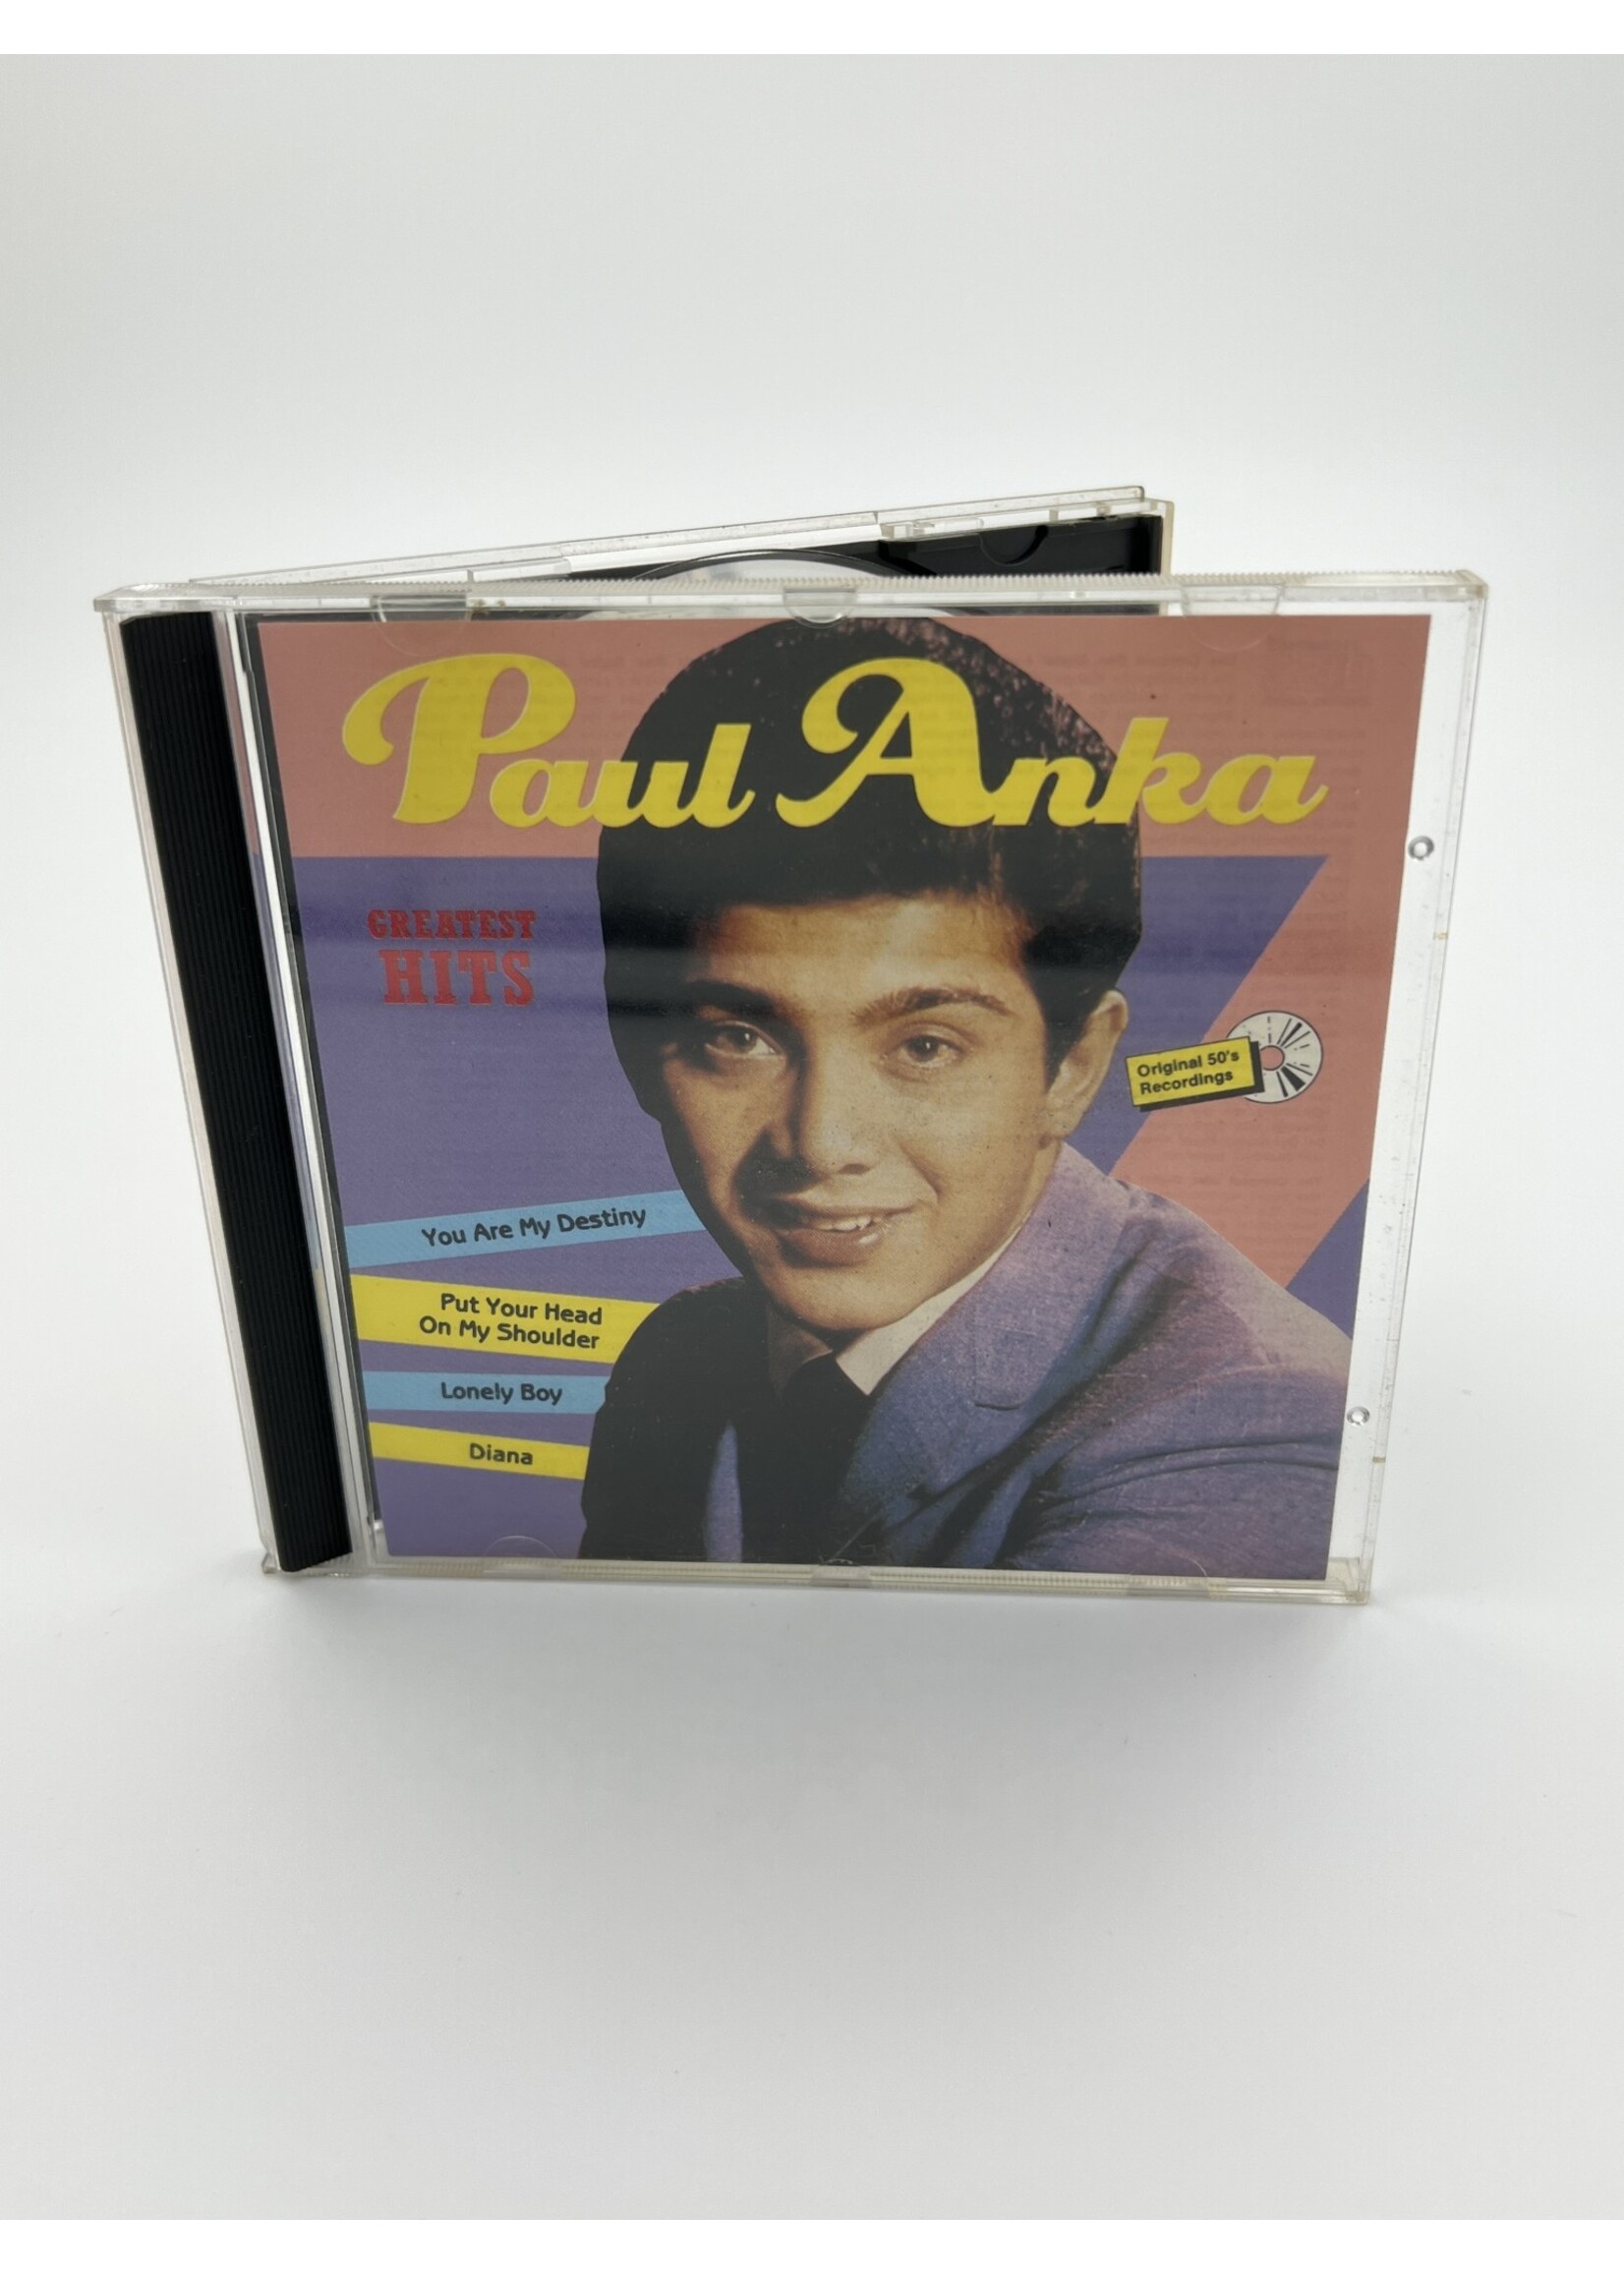 CD Paul Anka Greatest Hits CD